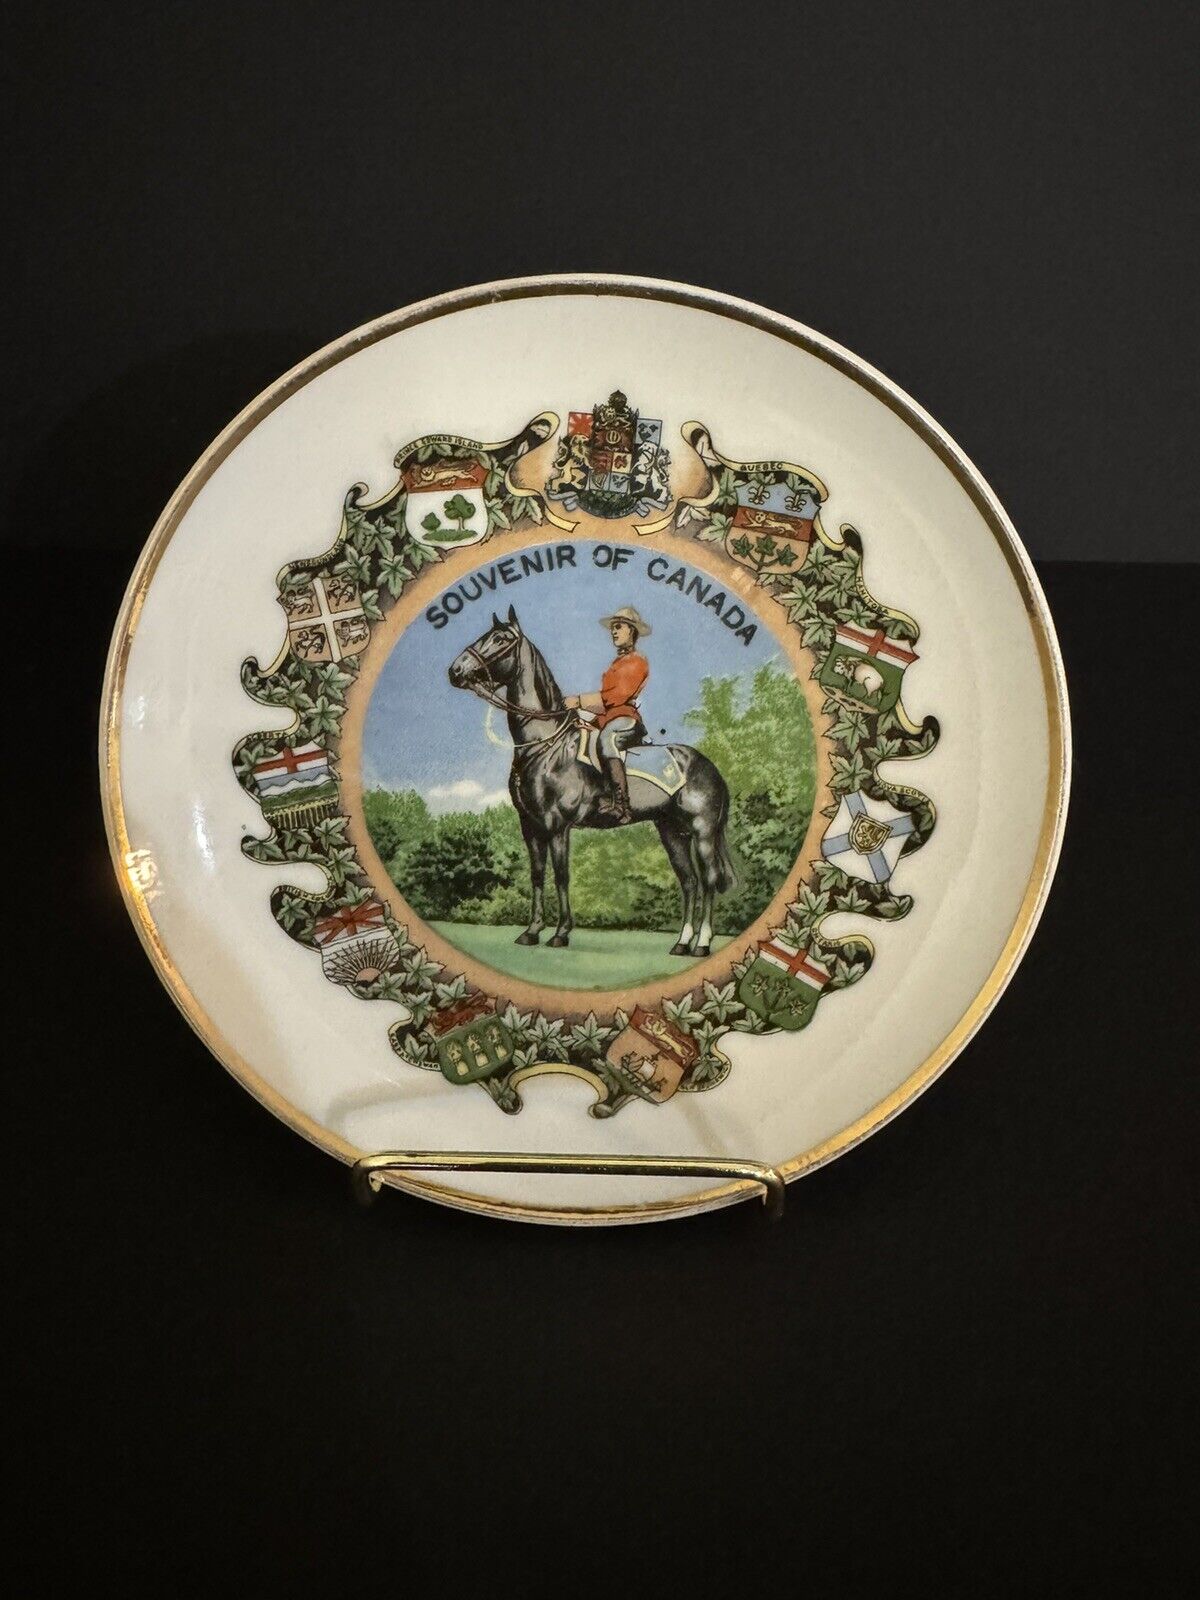 Vintage Decorative Plate Souvenir Of Canada Mid Century Design Collectible🇨🇦